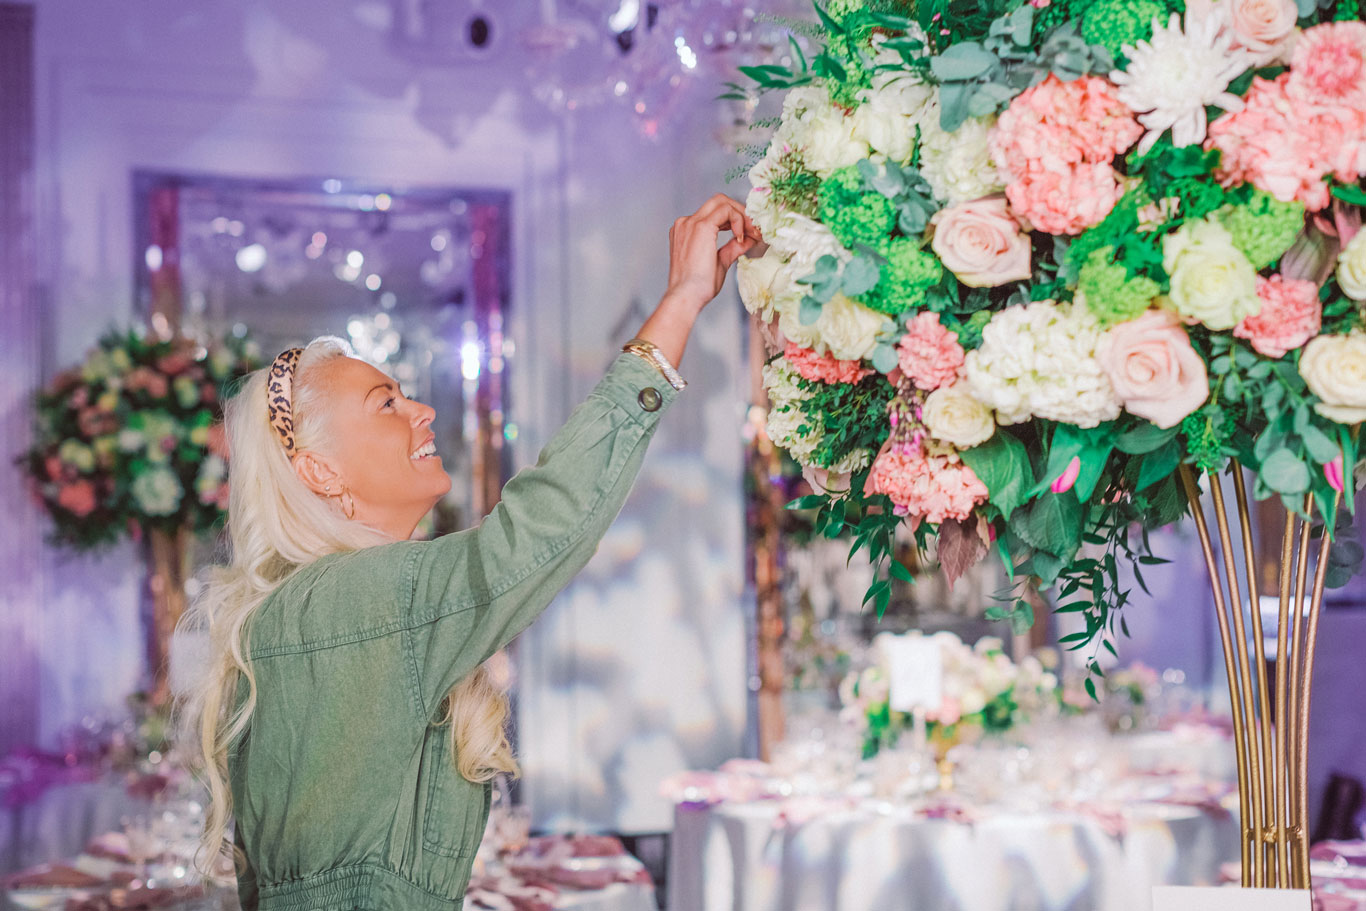 Florist Amie Bone arranges a flower bouquet for a wedding in Claridges Hotel